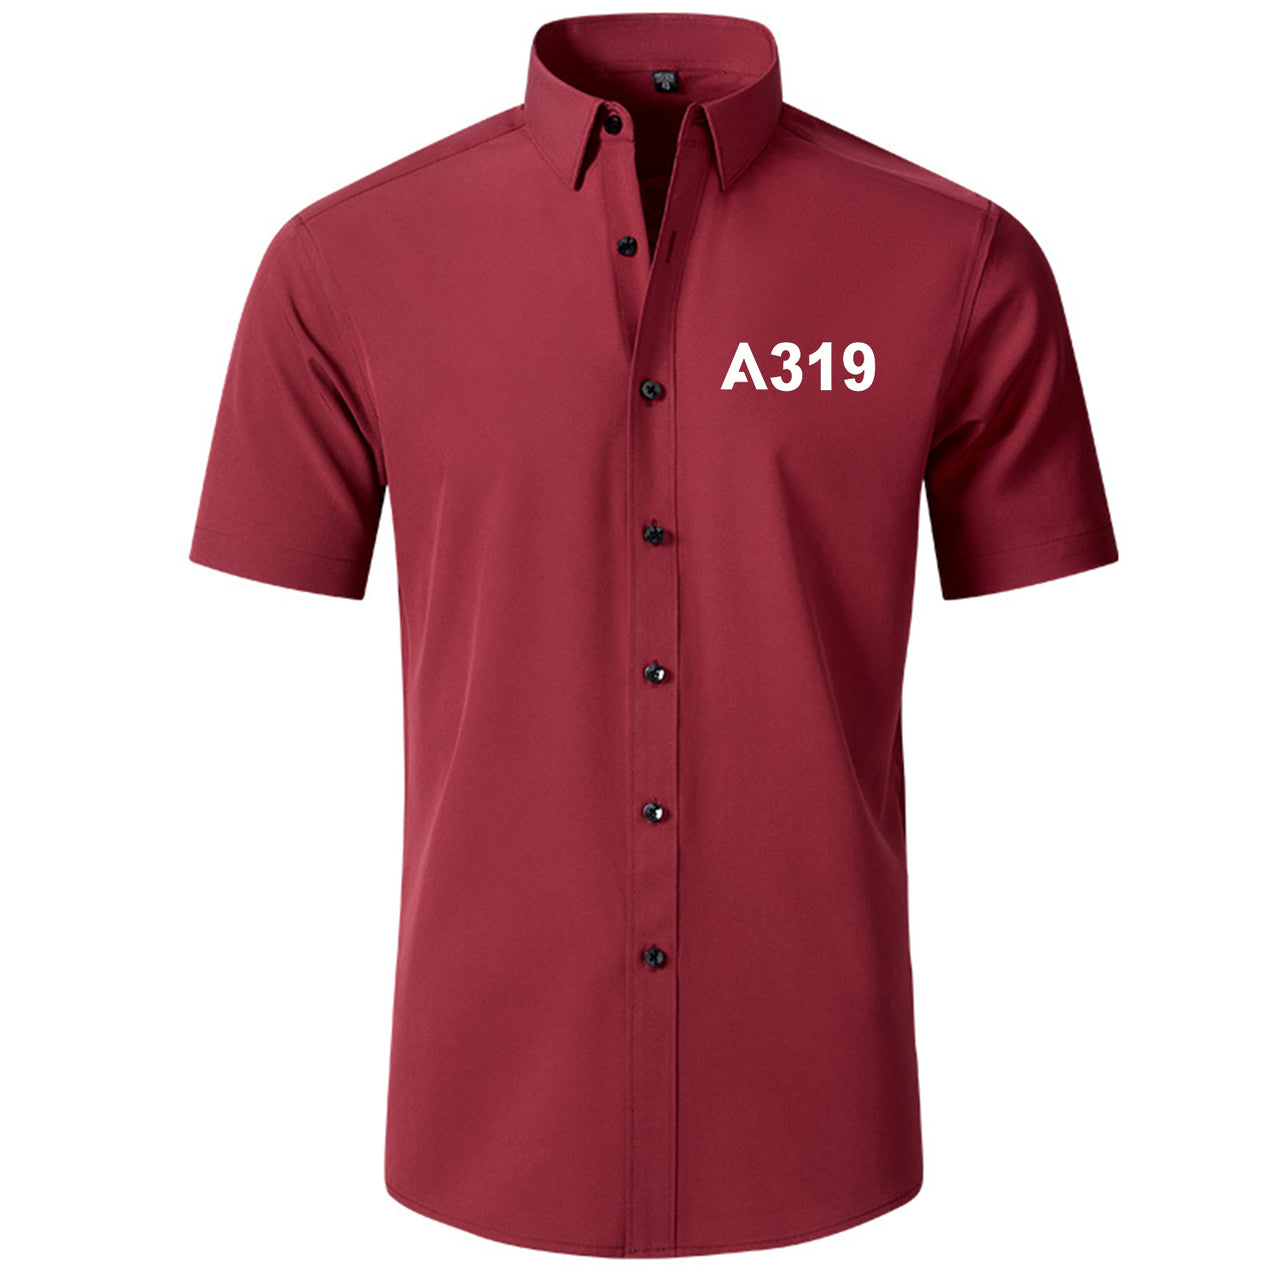 A319 Flat Text Designed Short Sleeve Shirts